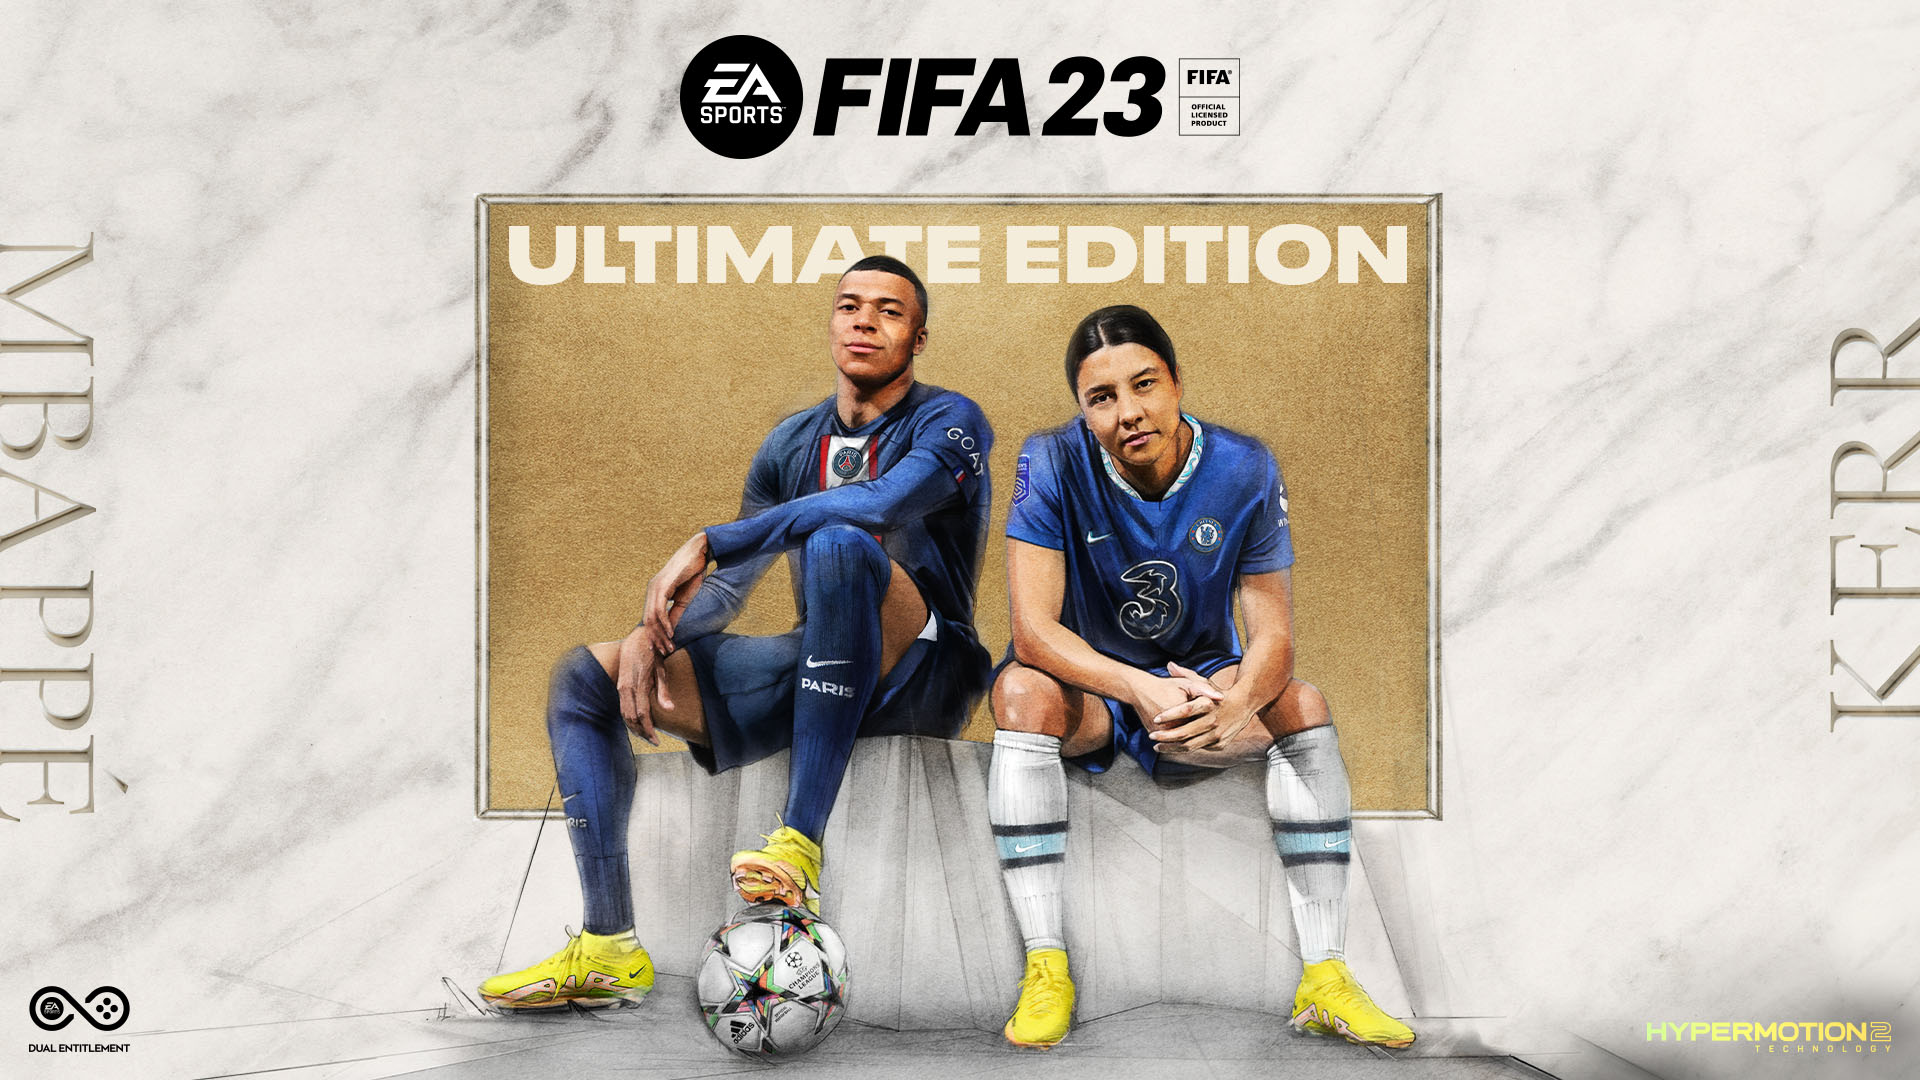 EA SPORTS™ UNVEILS FIFA 23 COVER ATHLETES KYLIAN MBAPPÉ & SAM KERR